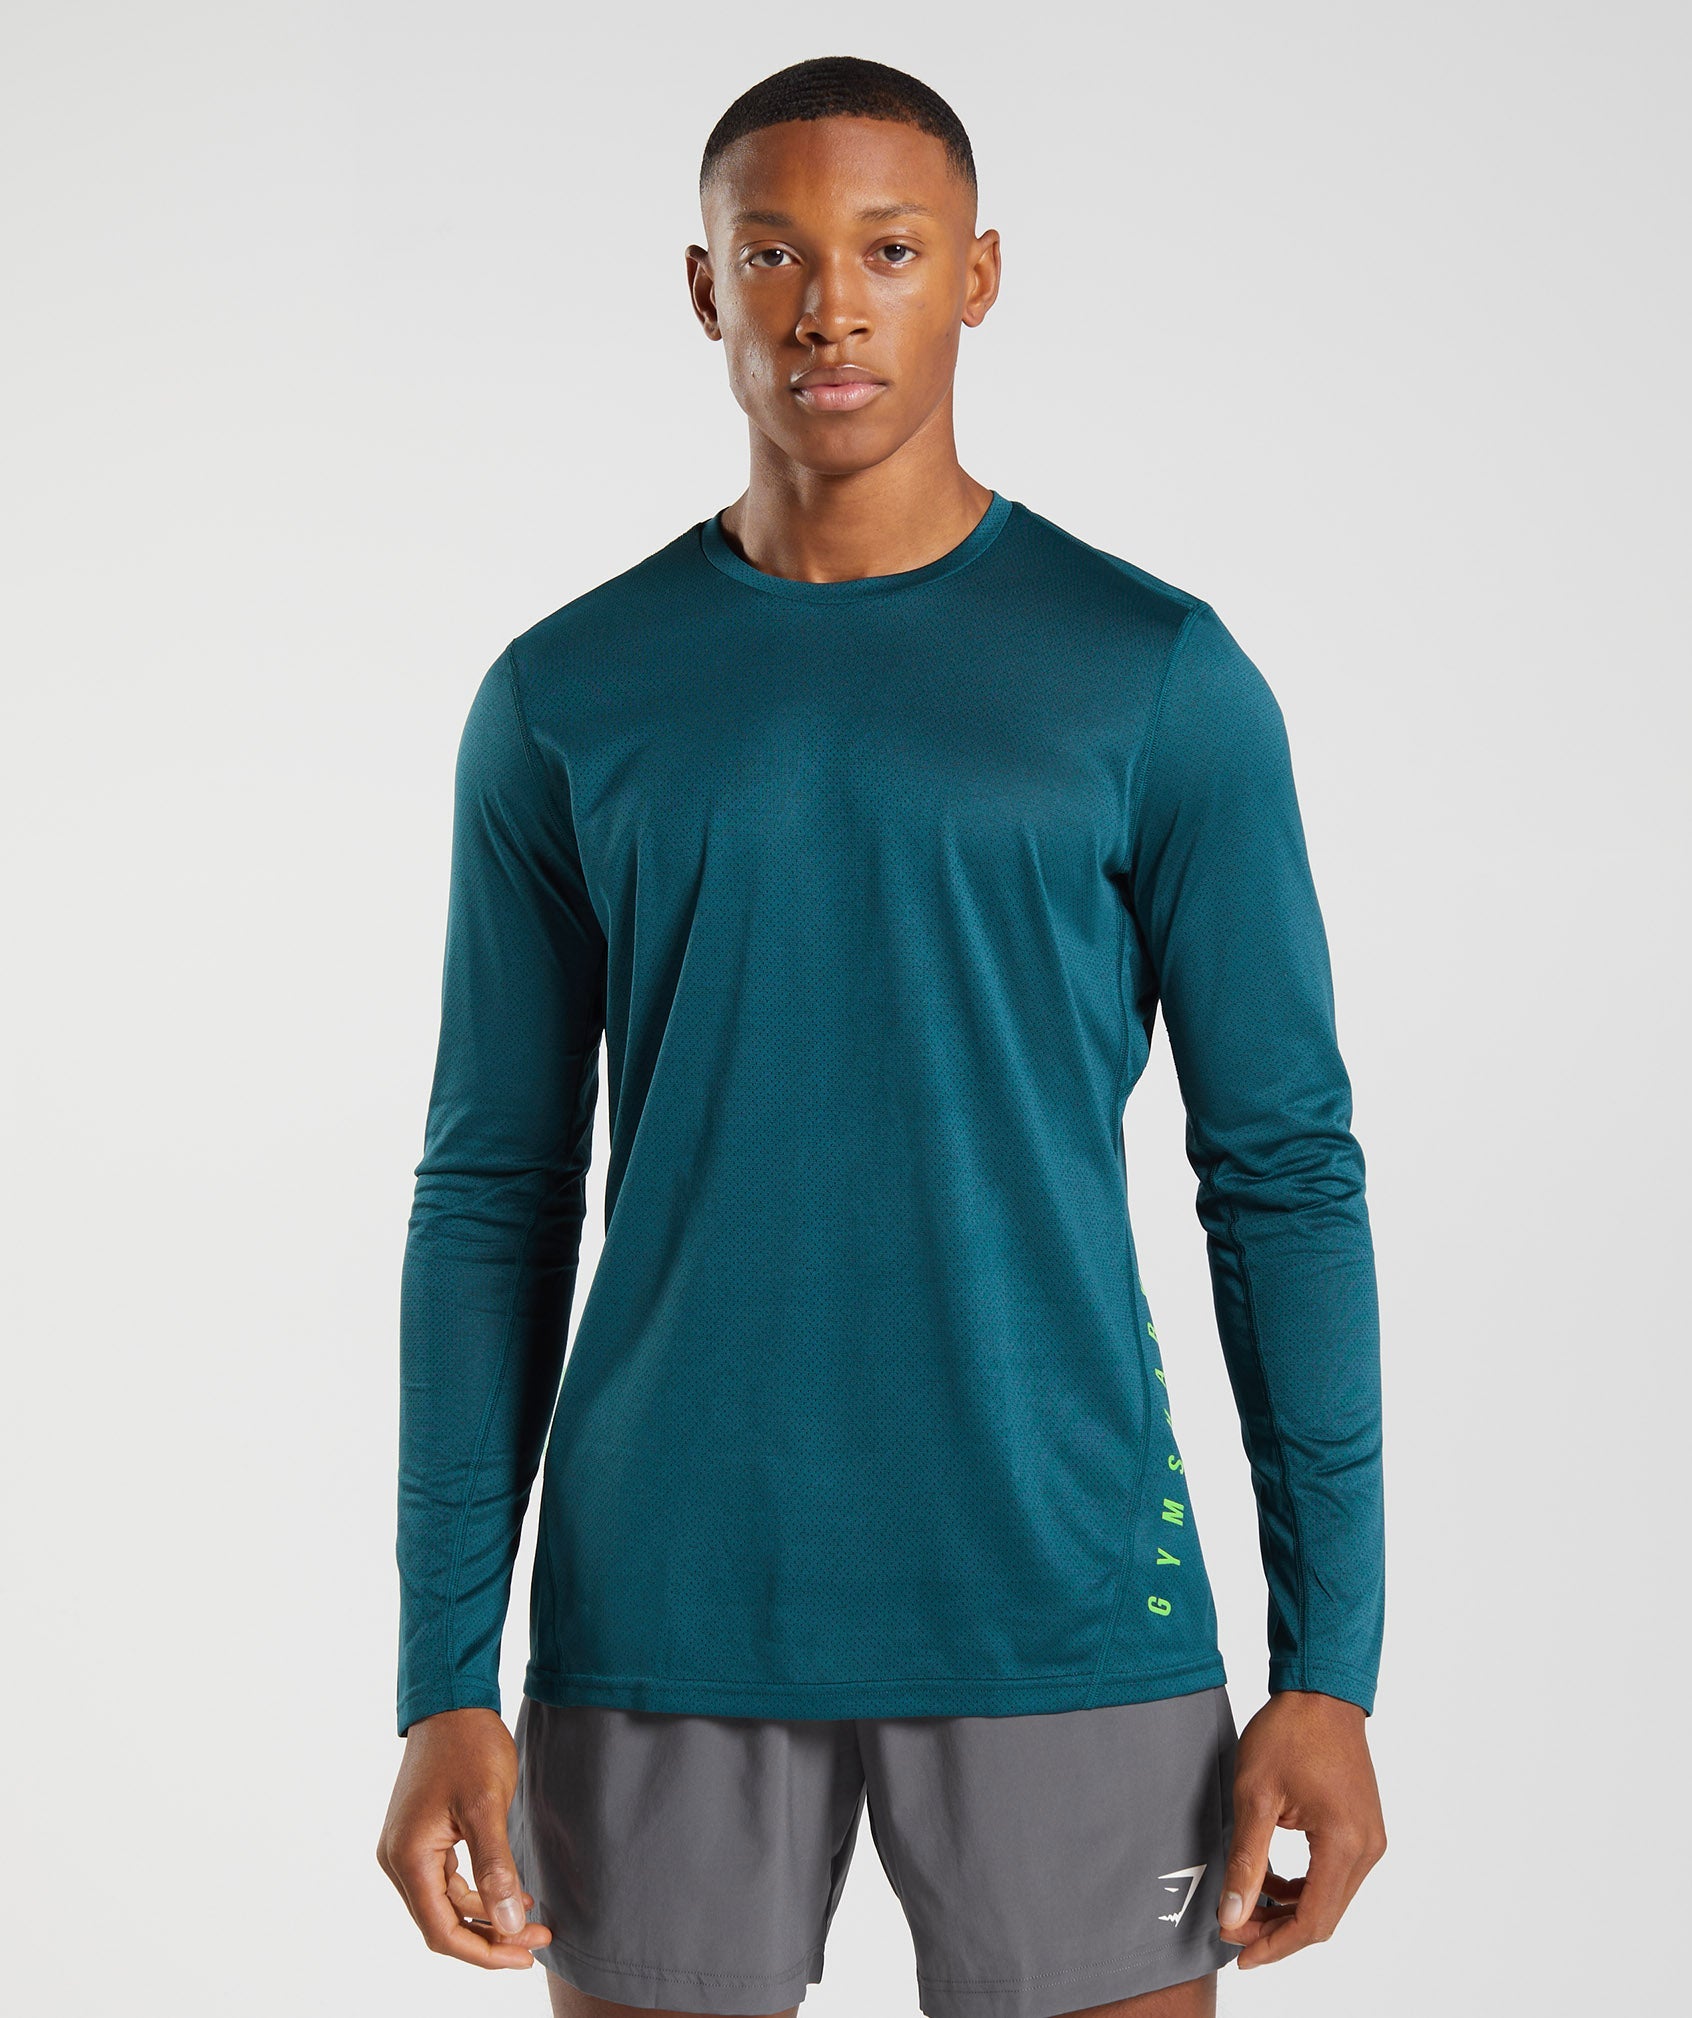 Sport Long Sleeve T-Shirt in Winter Teal/Black Marl - view 1